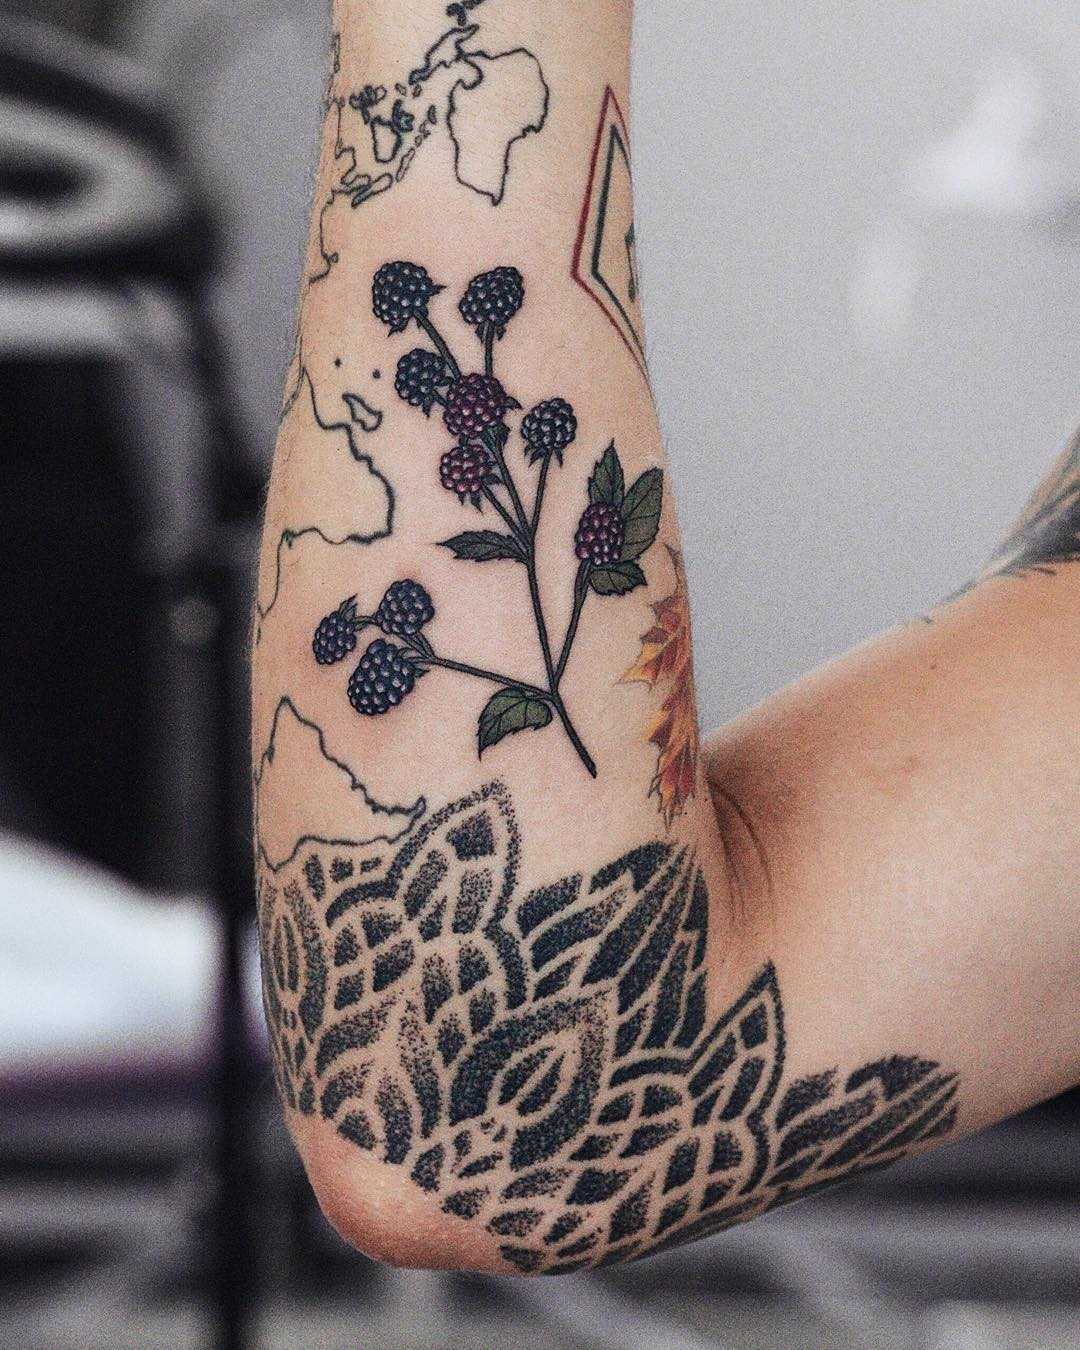 Tiny blackberry tattoo on the forearm